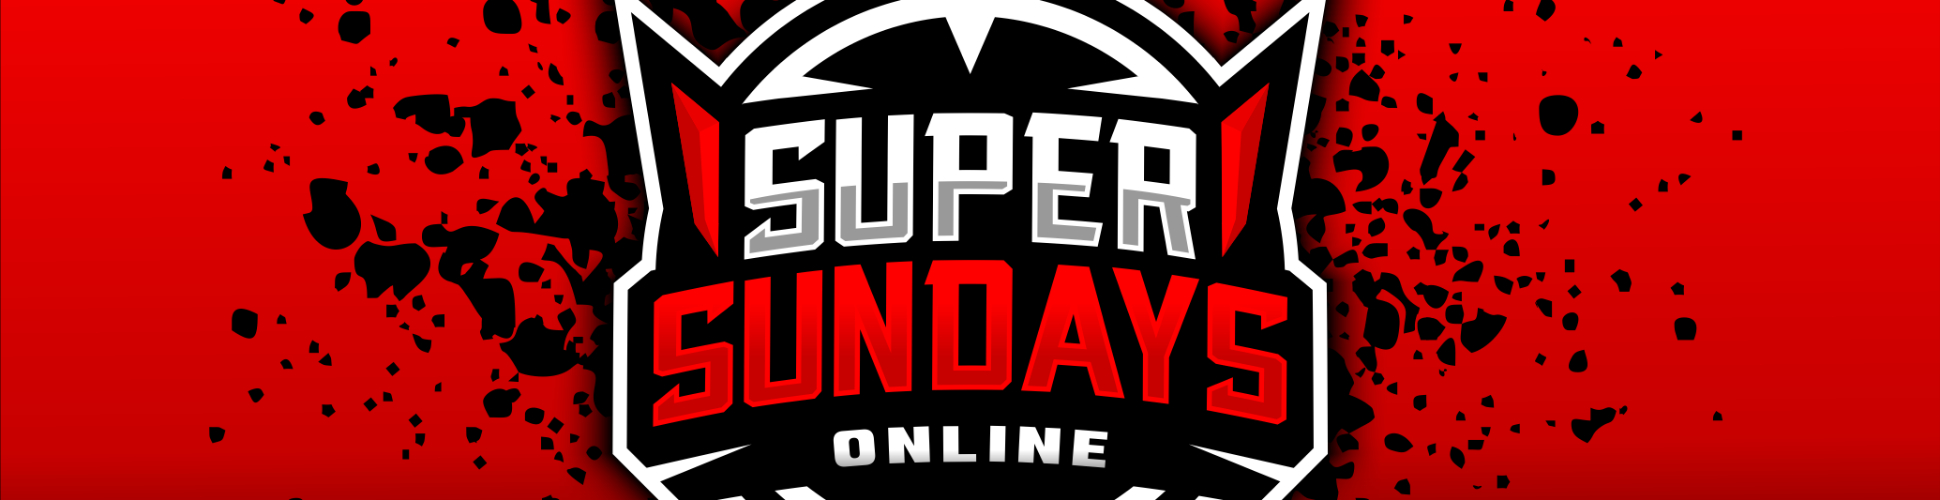 Super Sundays Online Episode 10: DNF Duel